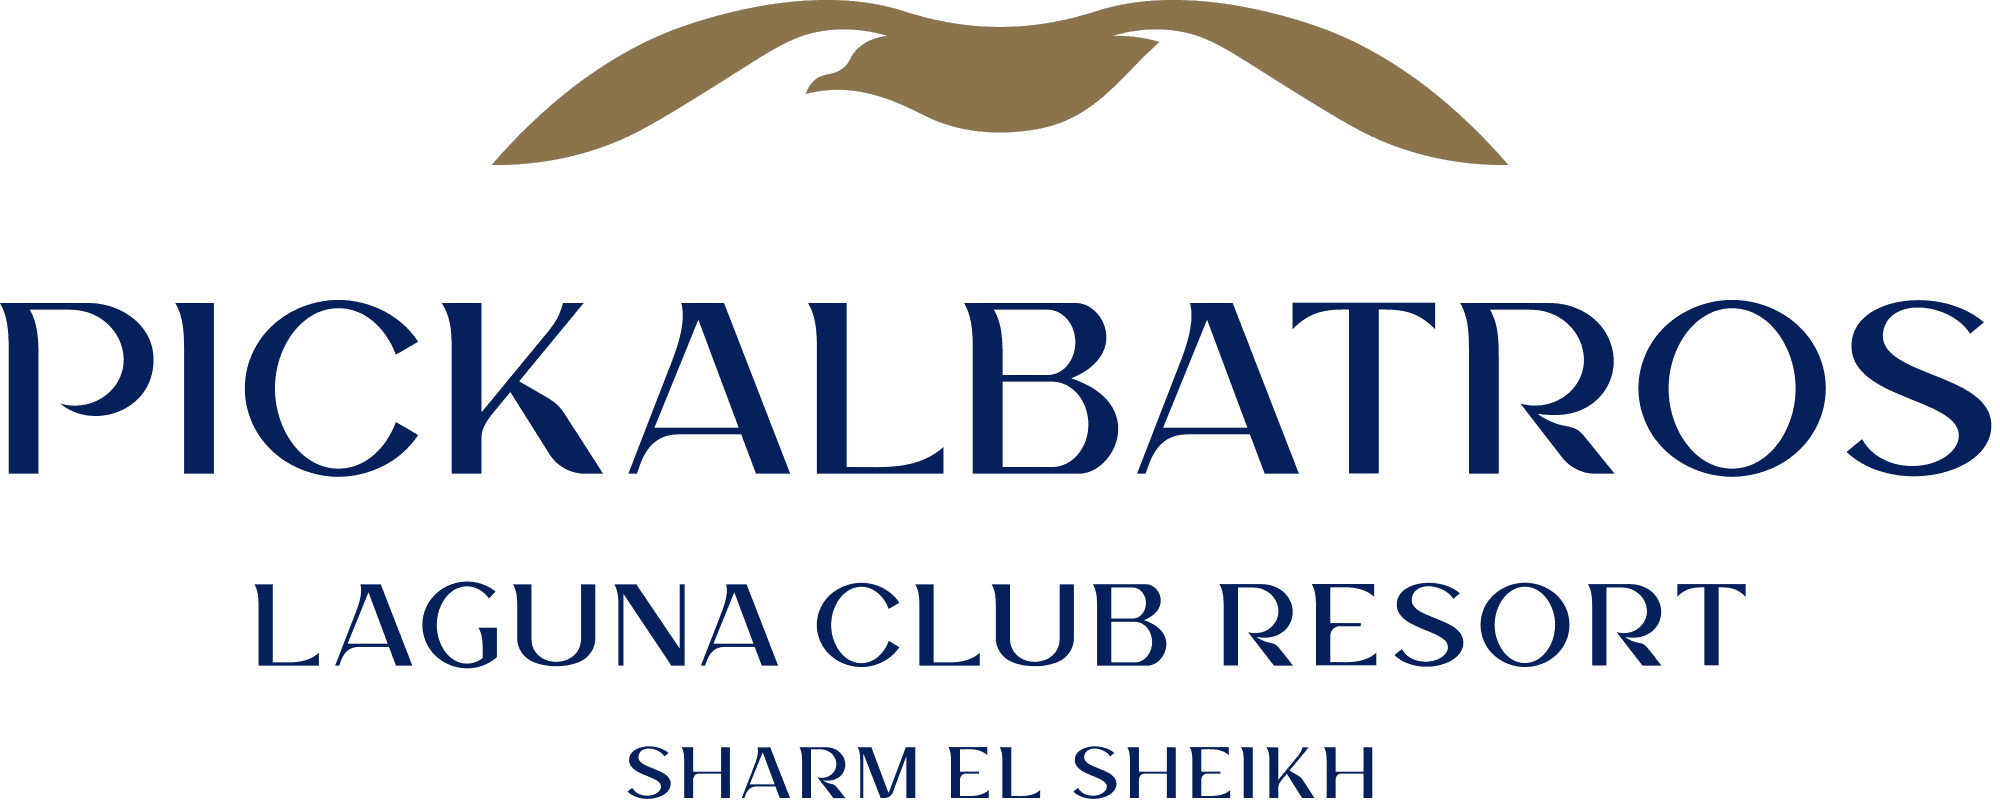 Pickalbatros Laguna Club Resort in Sharm El Sheikh